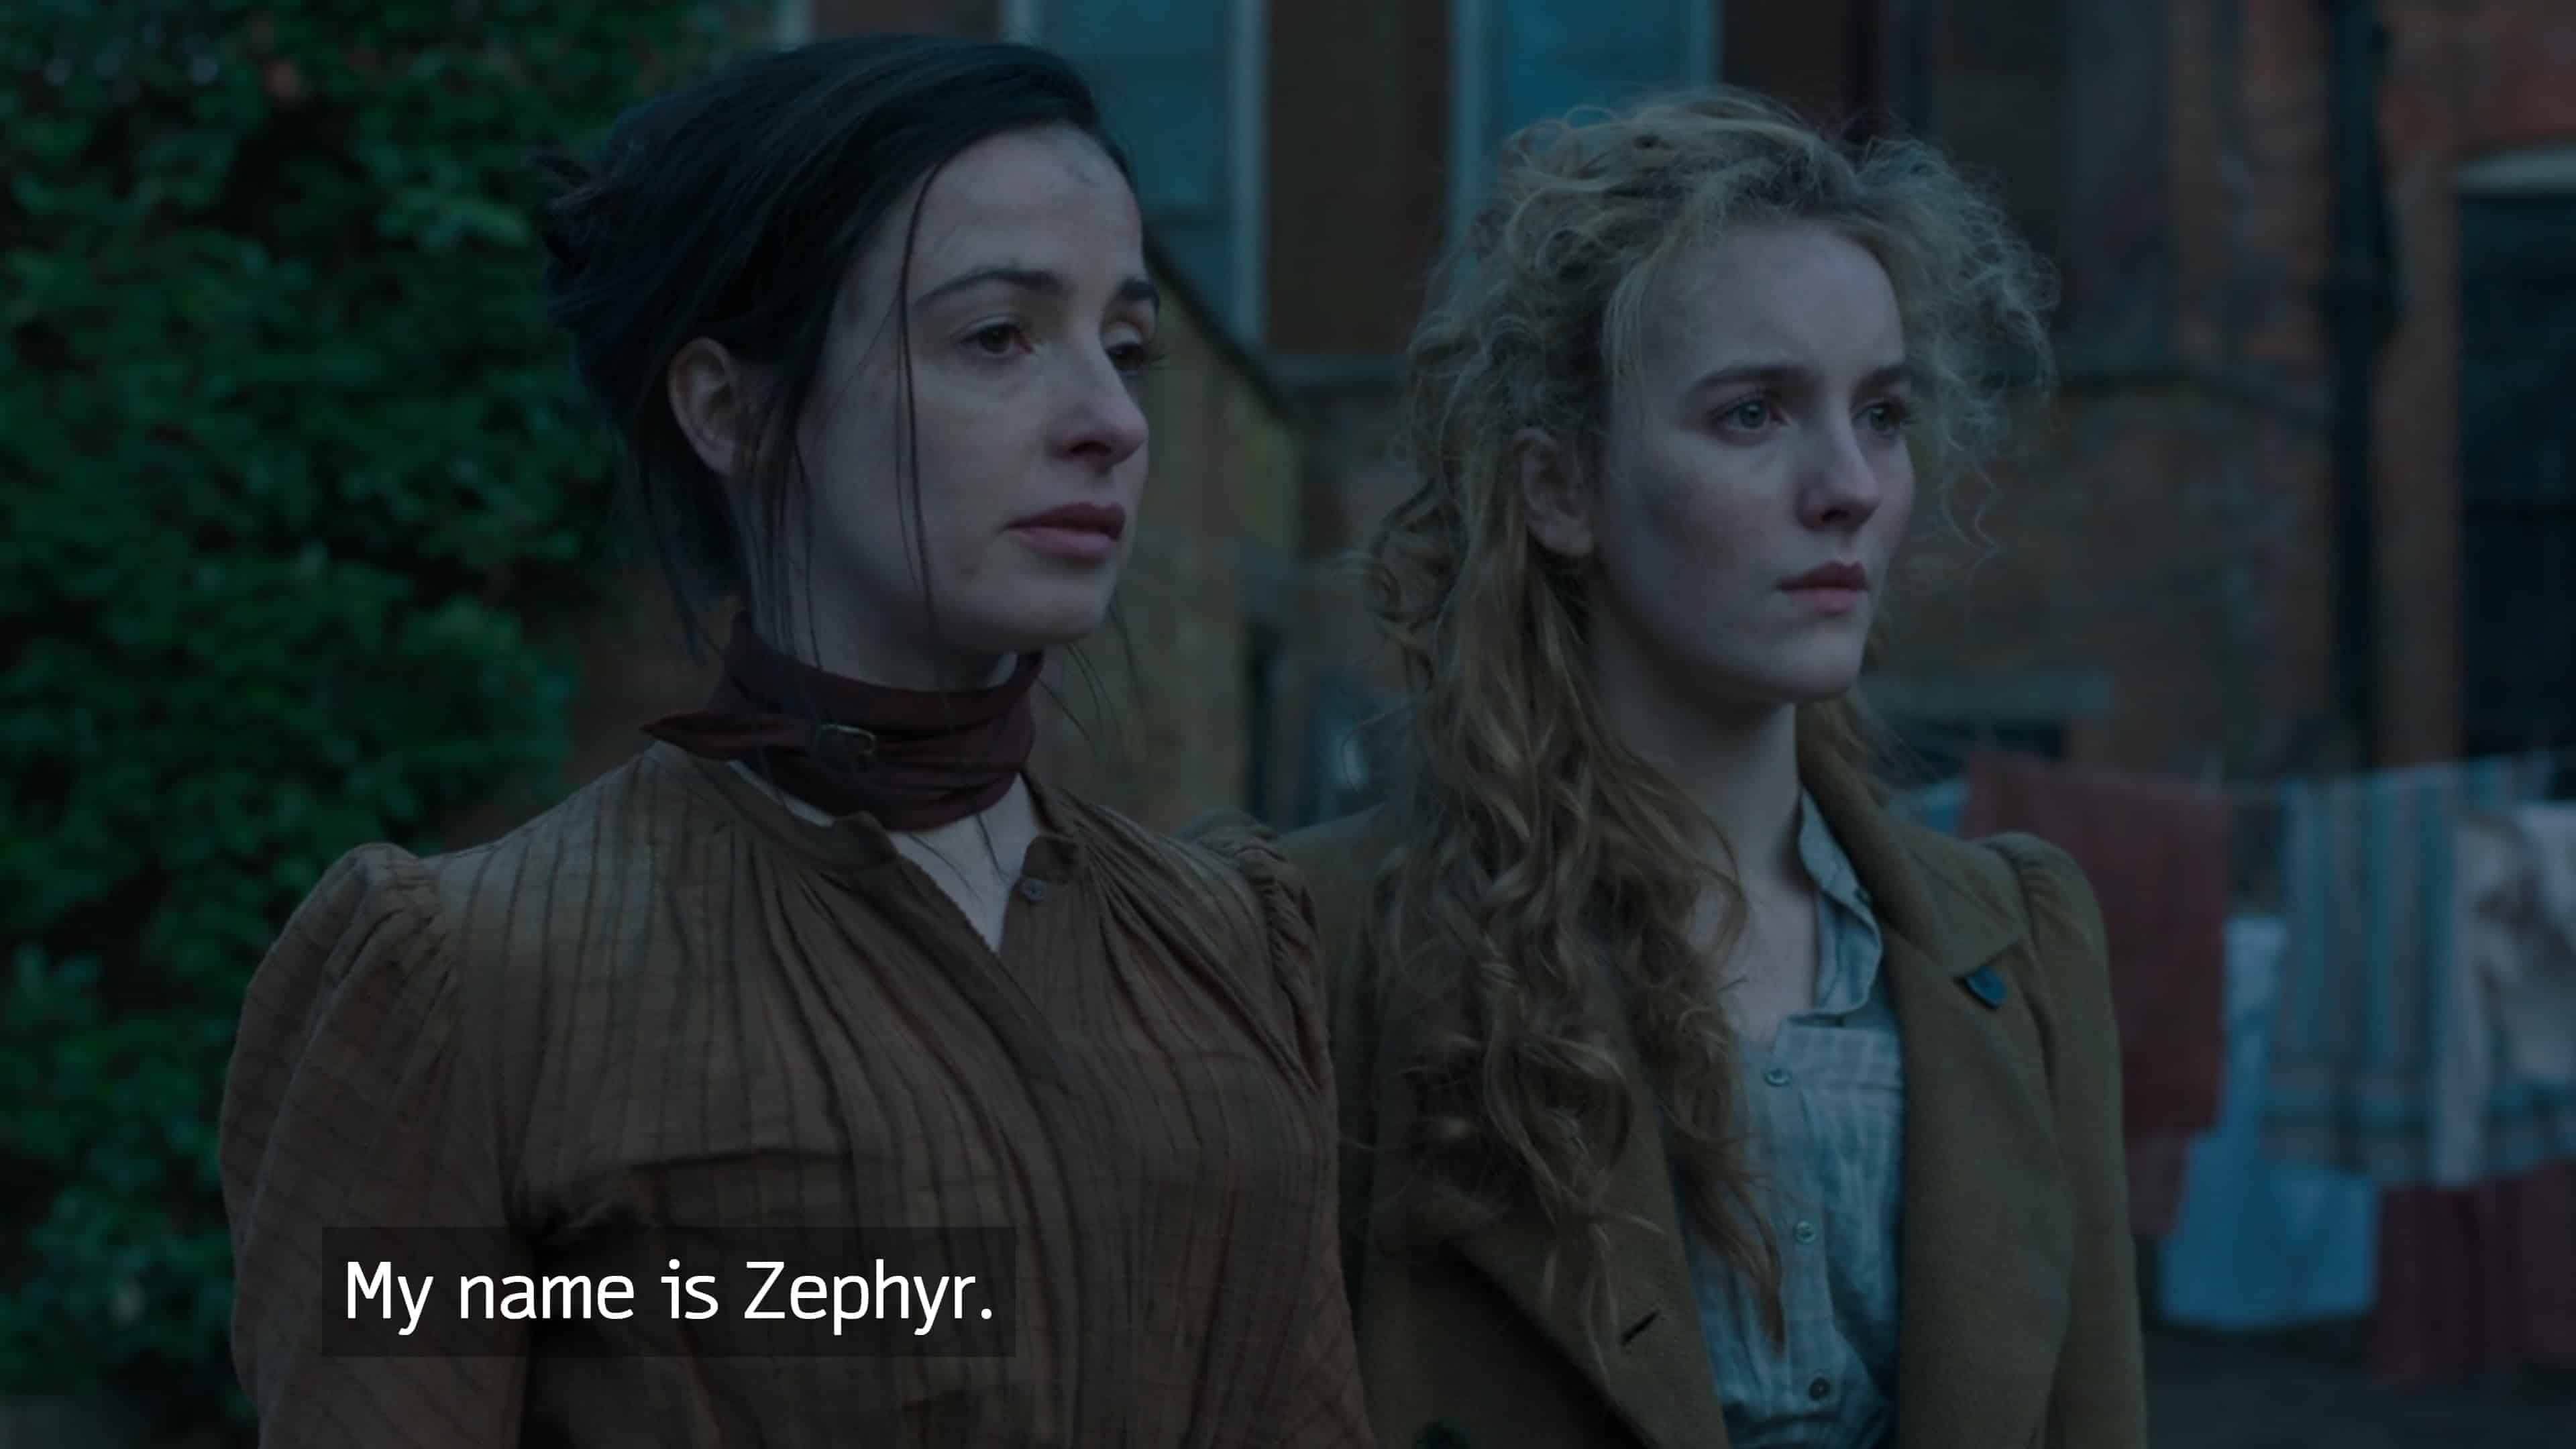 Amalia revealing her true name is Zephyr